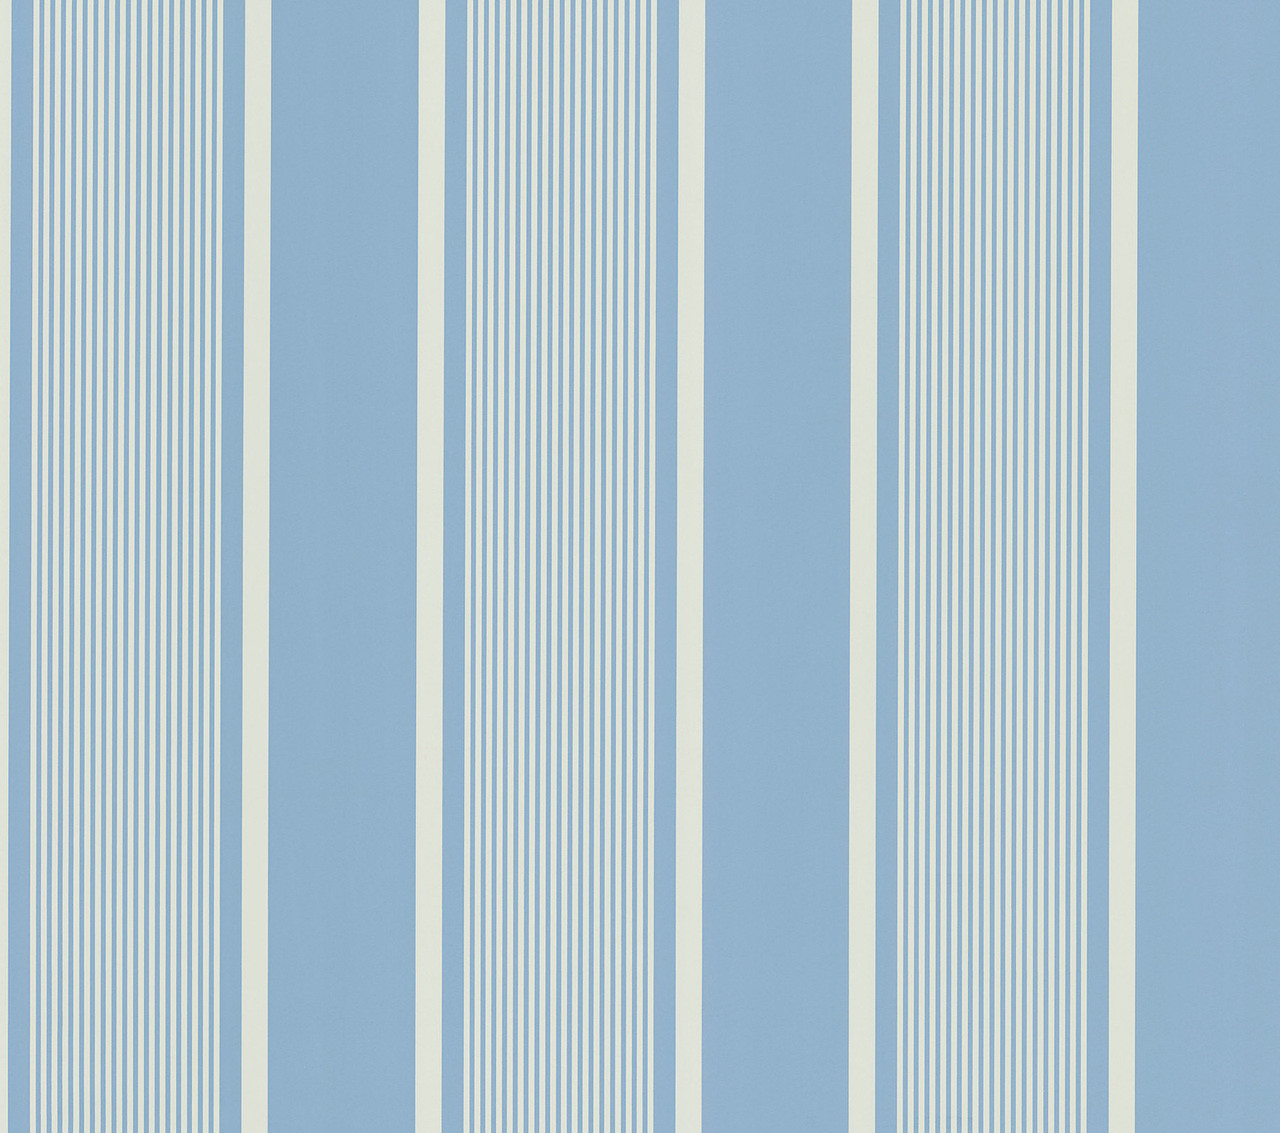 566-43972 - Bali Stripe Blue Stripe wallpaper | Indoorwallpaper.com